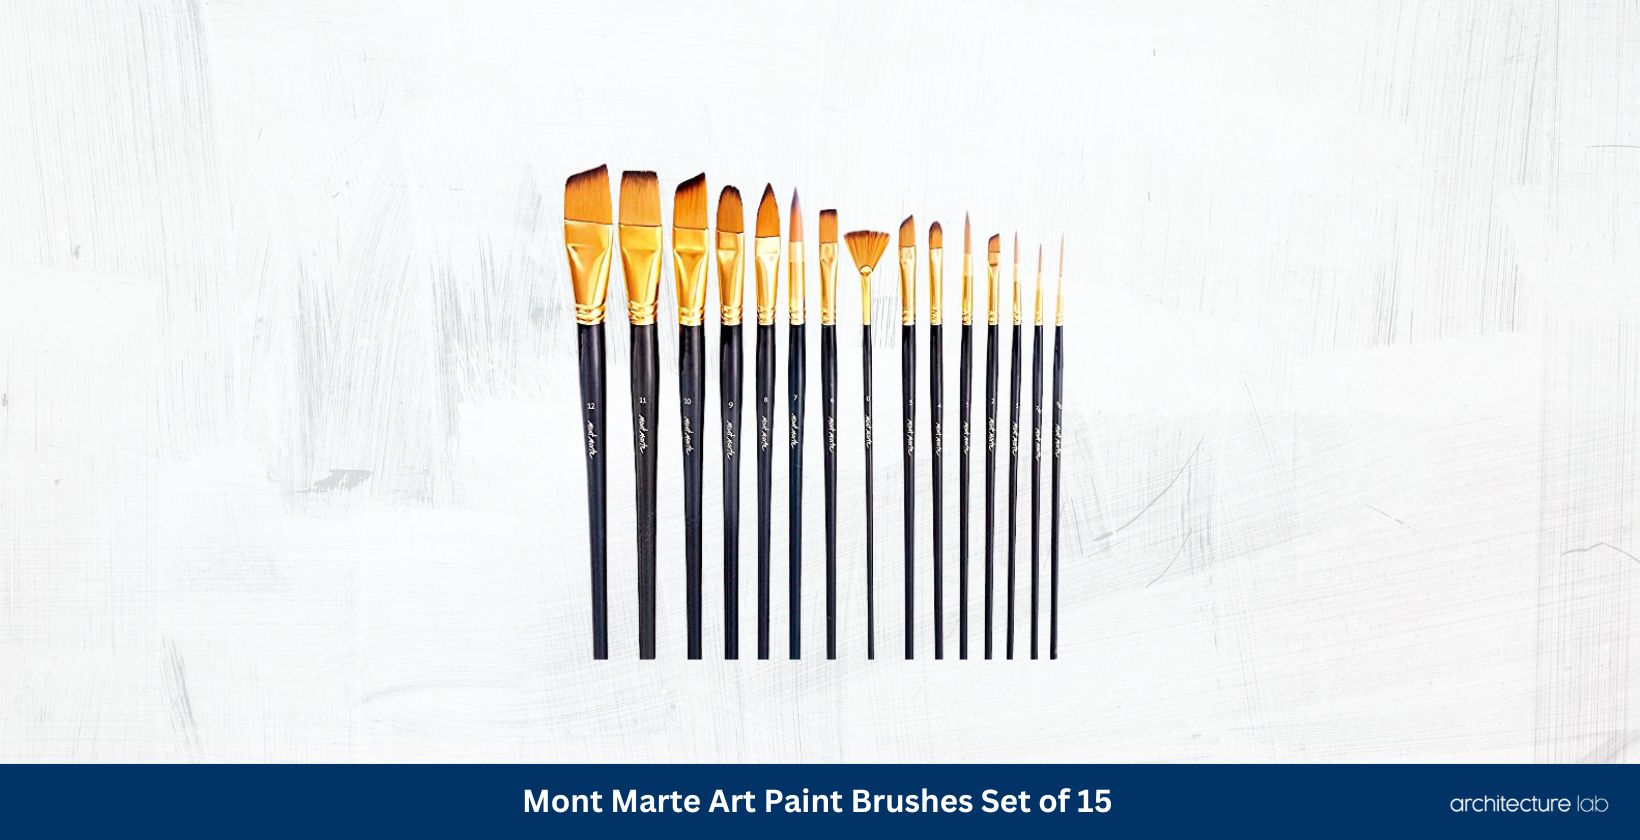 Mont marte art paint brushes set of 15